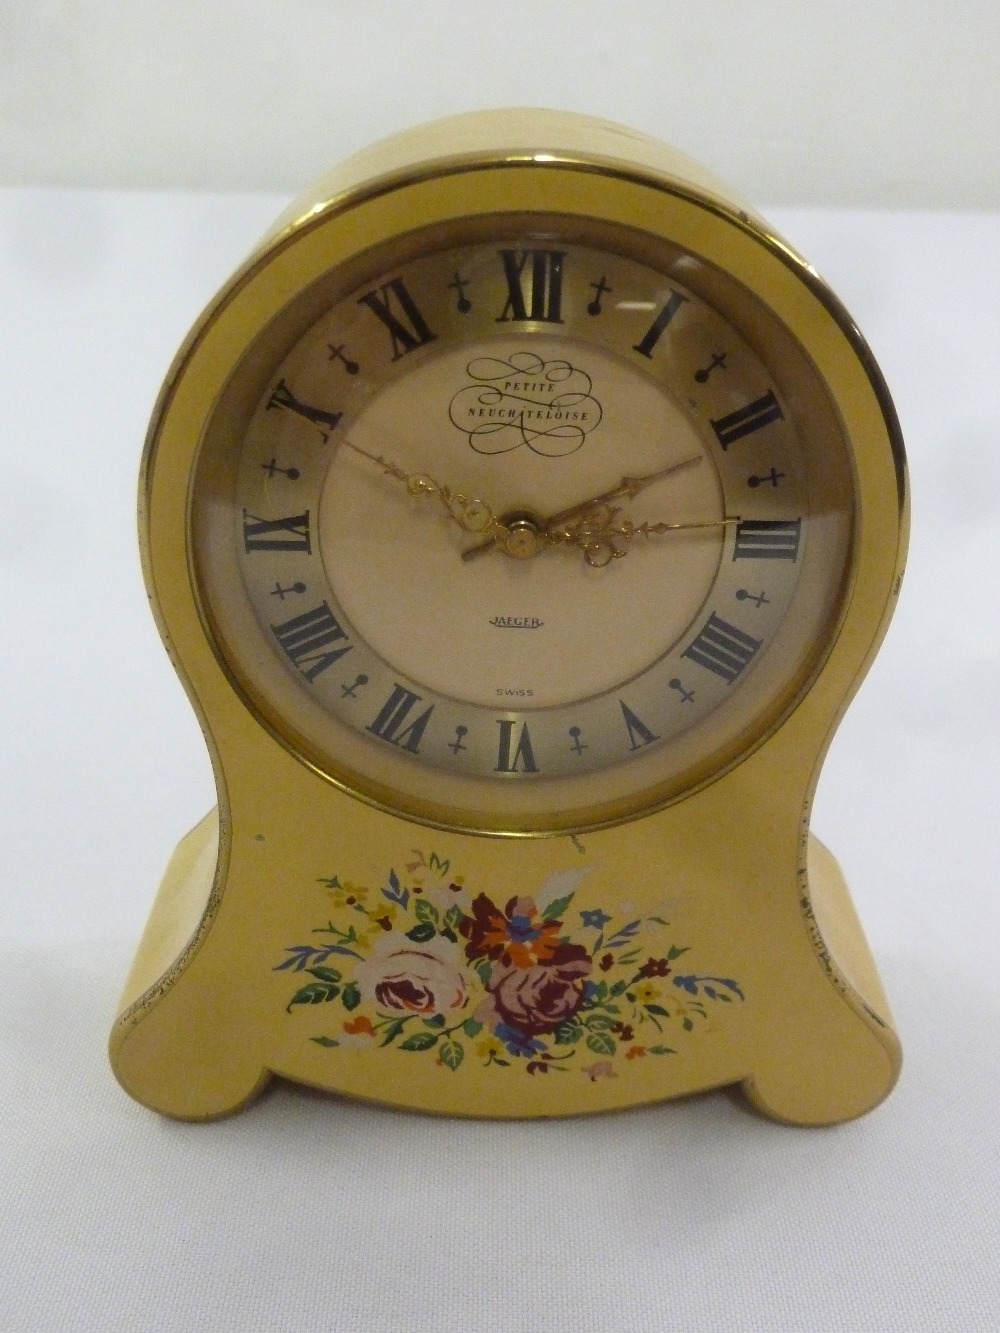 Jaeger Petite Neuchateloise Art Deco musical Swiss made alarm clock